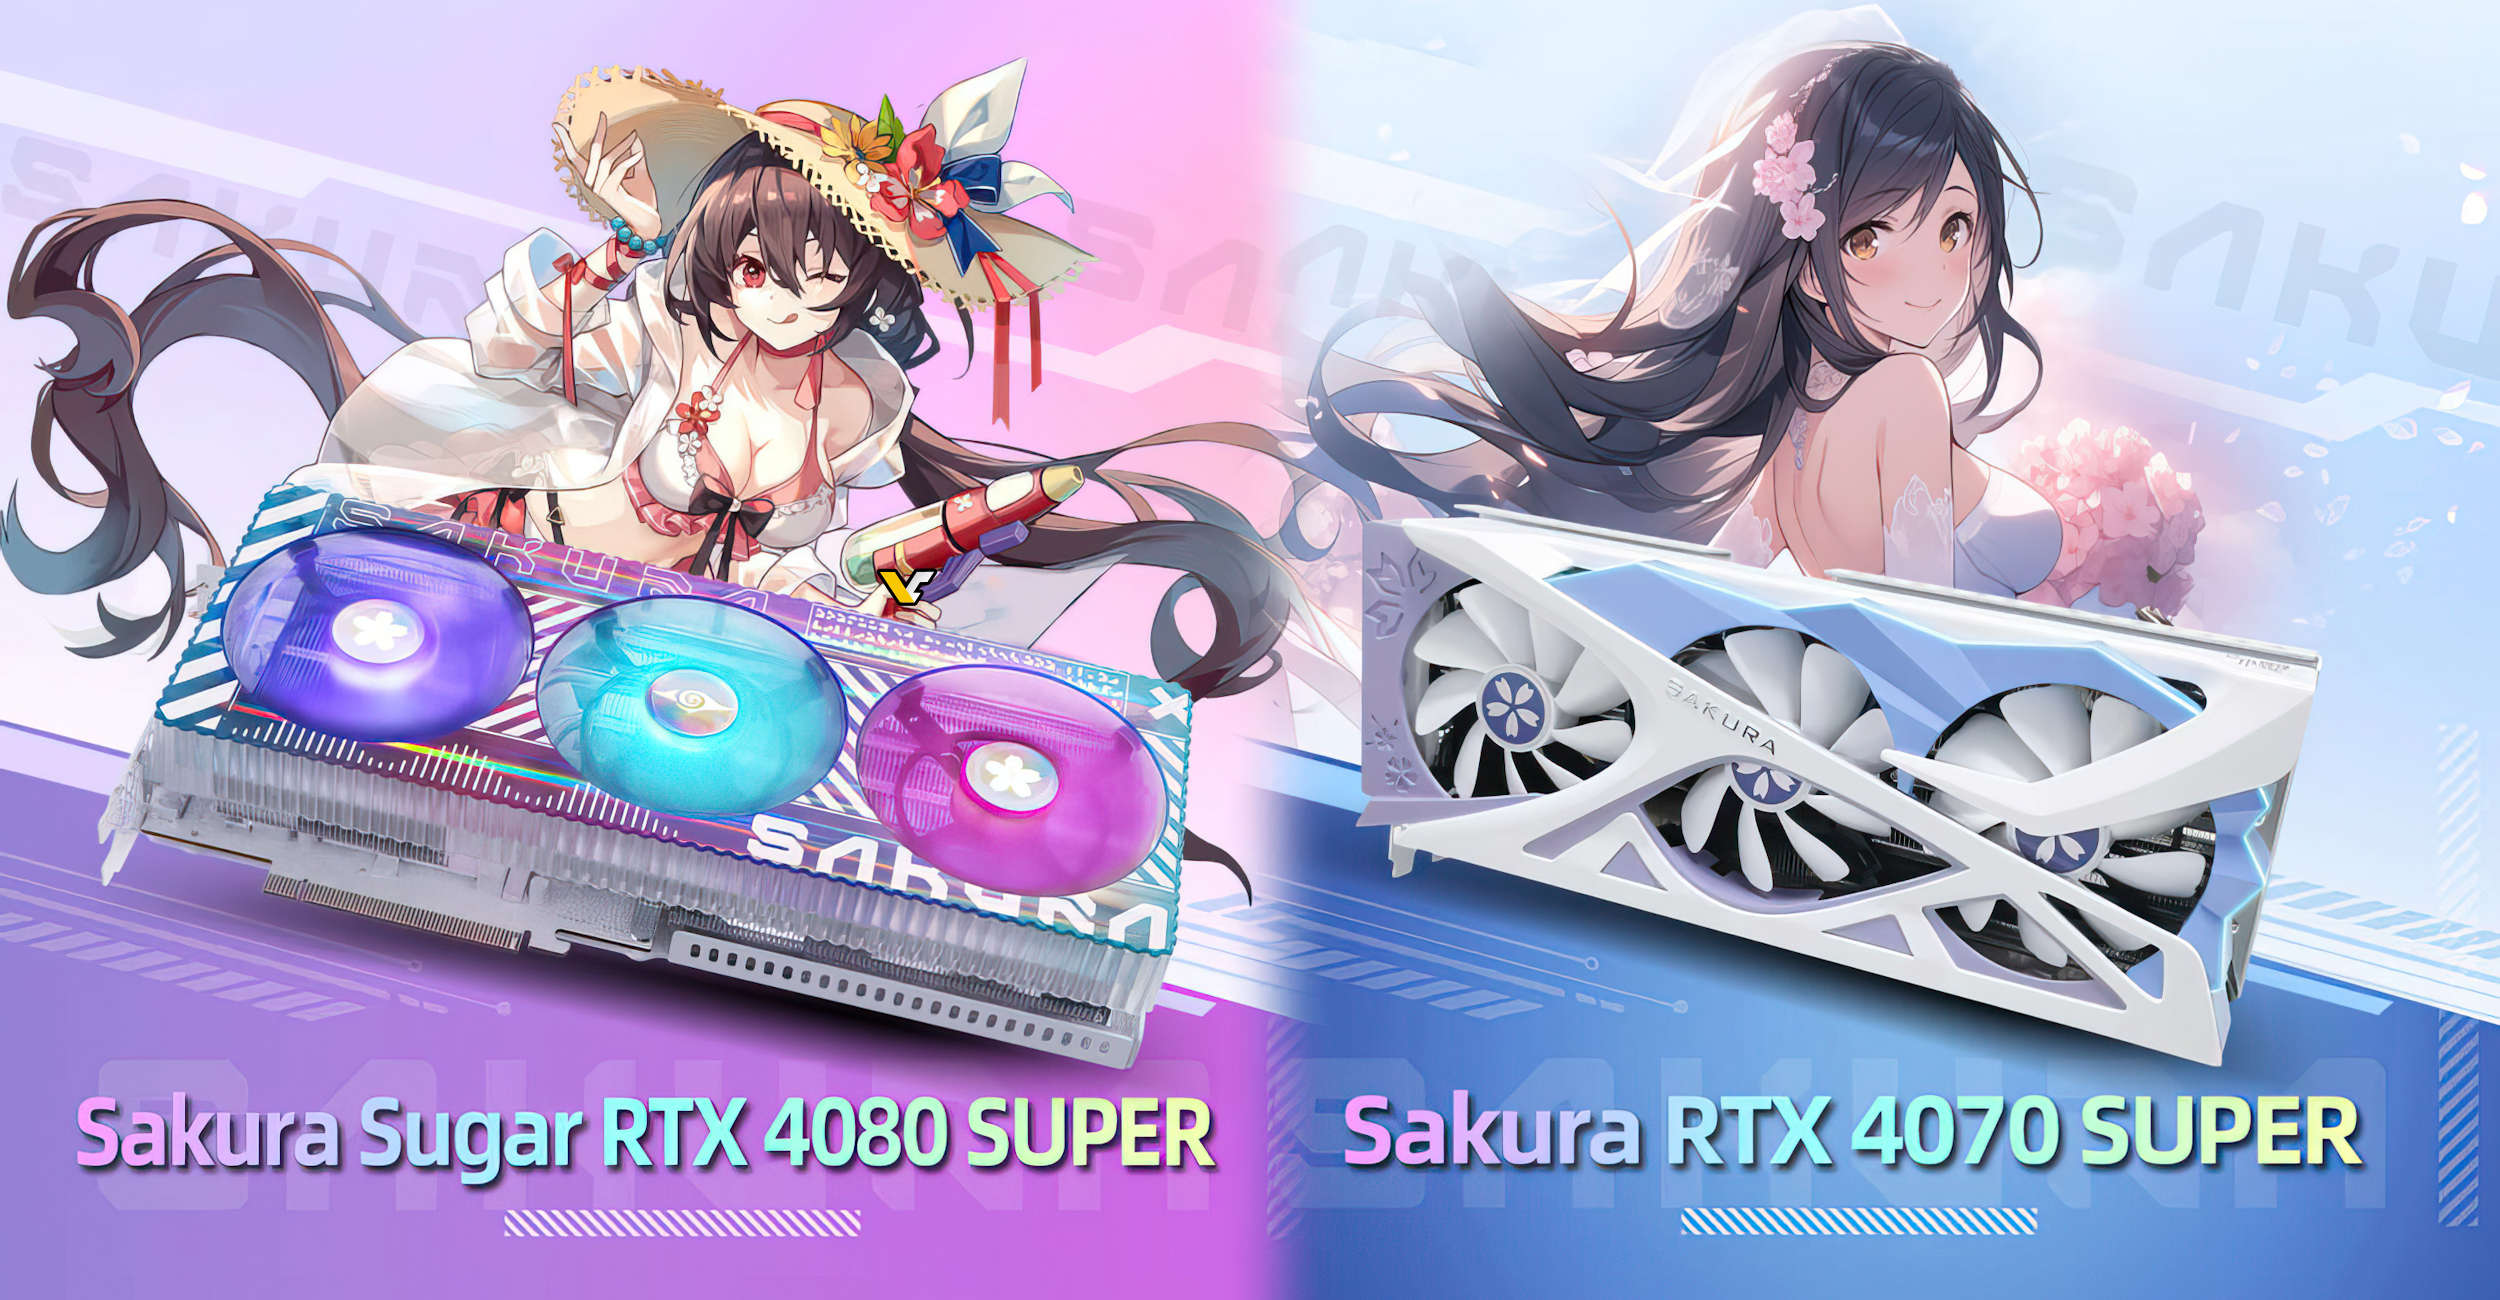 YESTON introduces Sakura RTX 40 SUPER cards with white PCB 